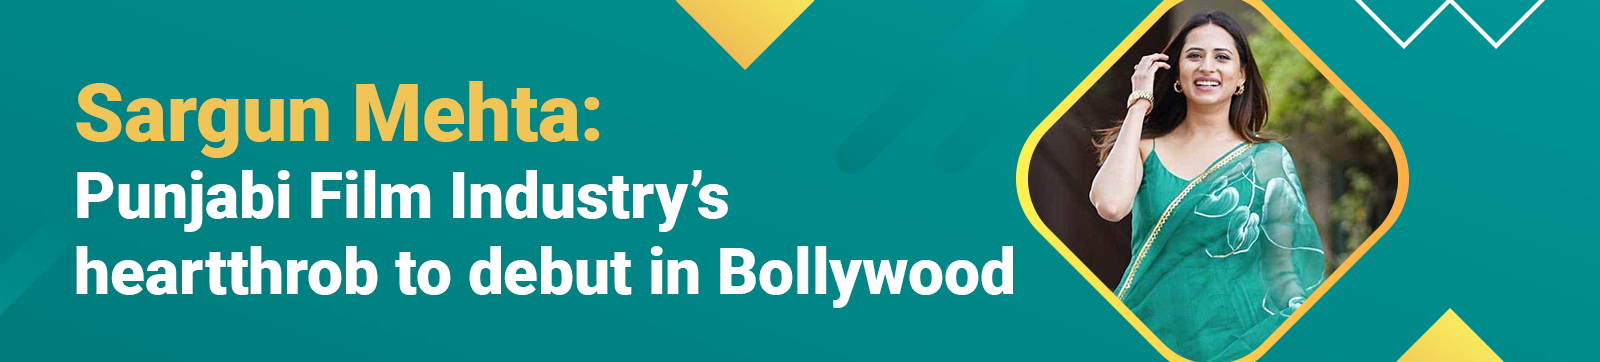 Sargun Mehta; Punjabi Film Industry’s Heartthrob to Debut in Bollywood